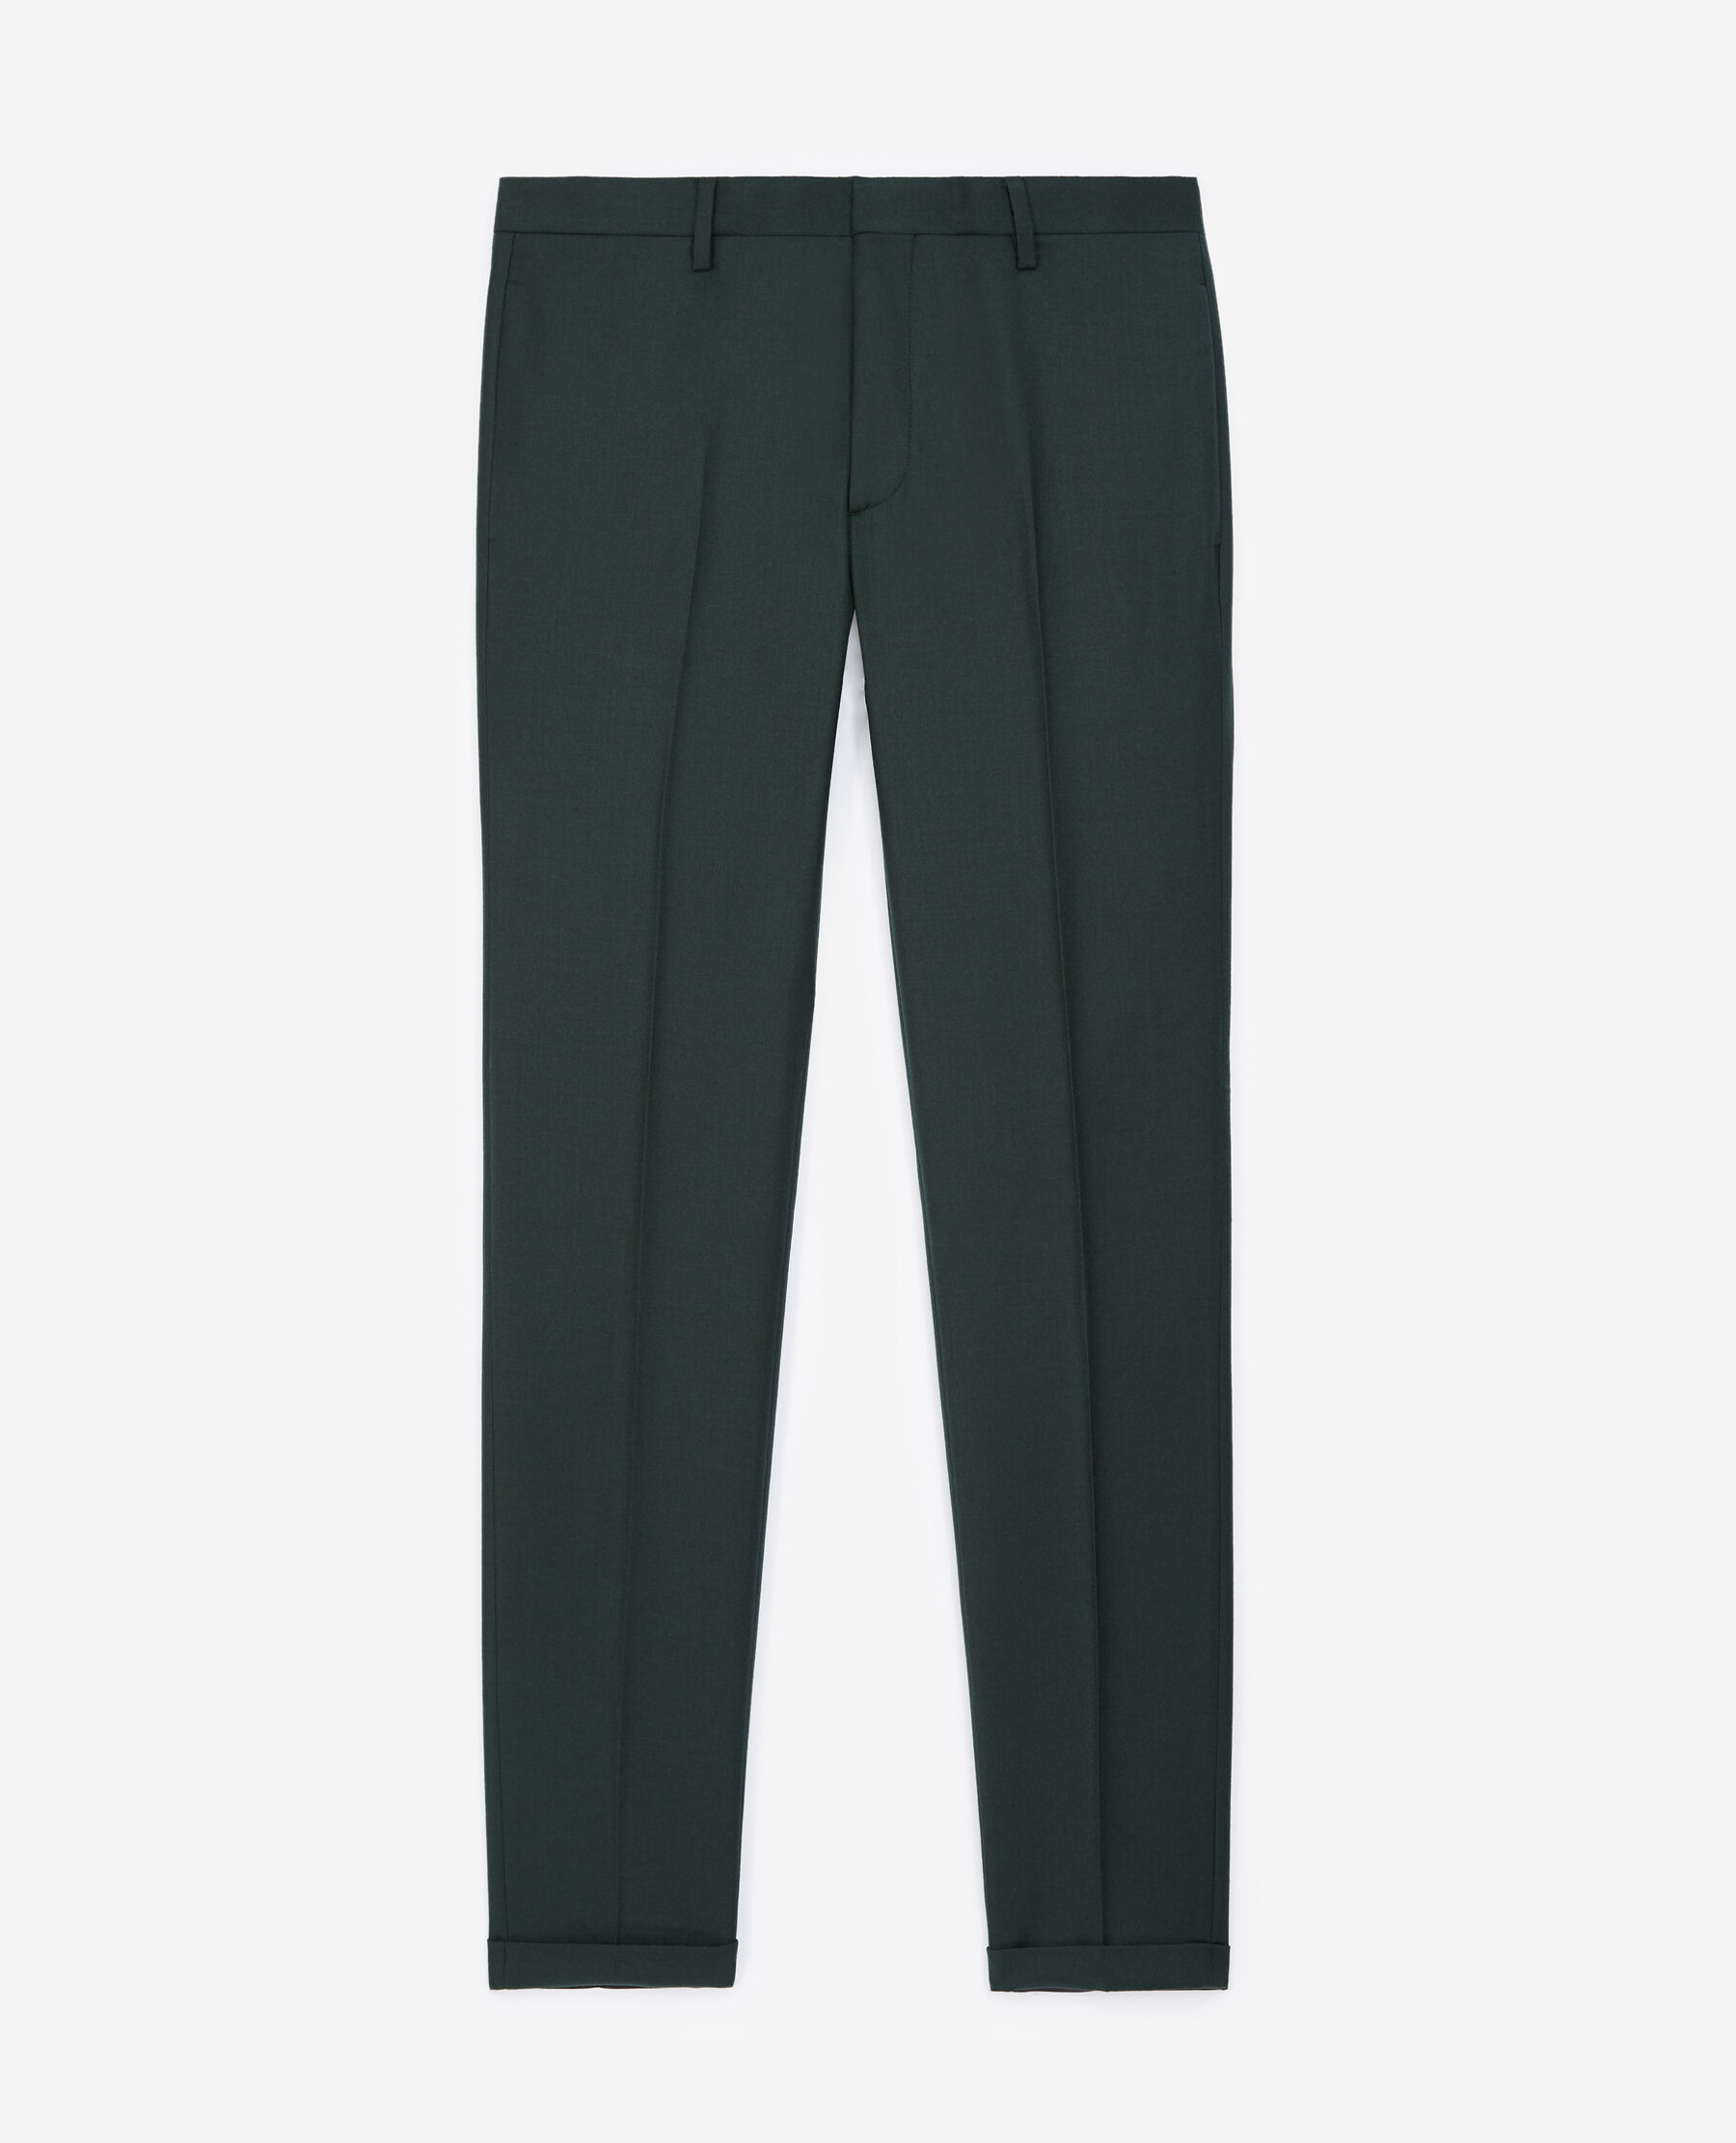 Weekday LEWIS SUIT TROUSER - Trousers - dark green - Zalando.ie